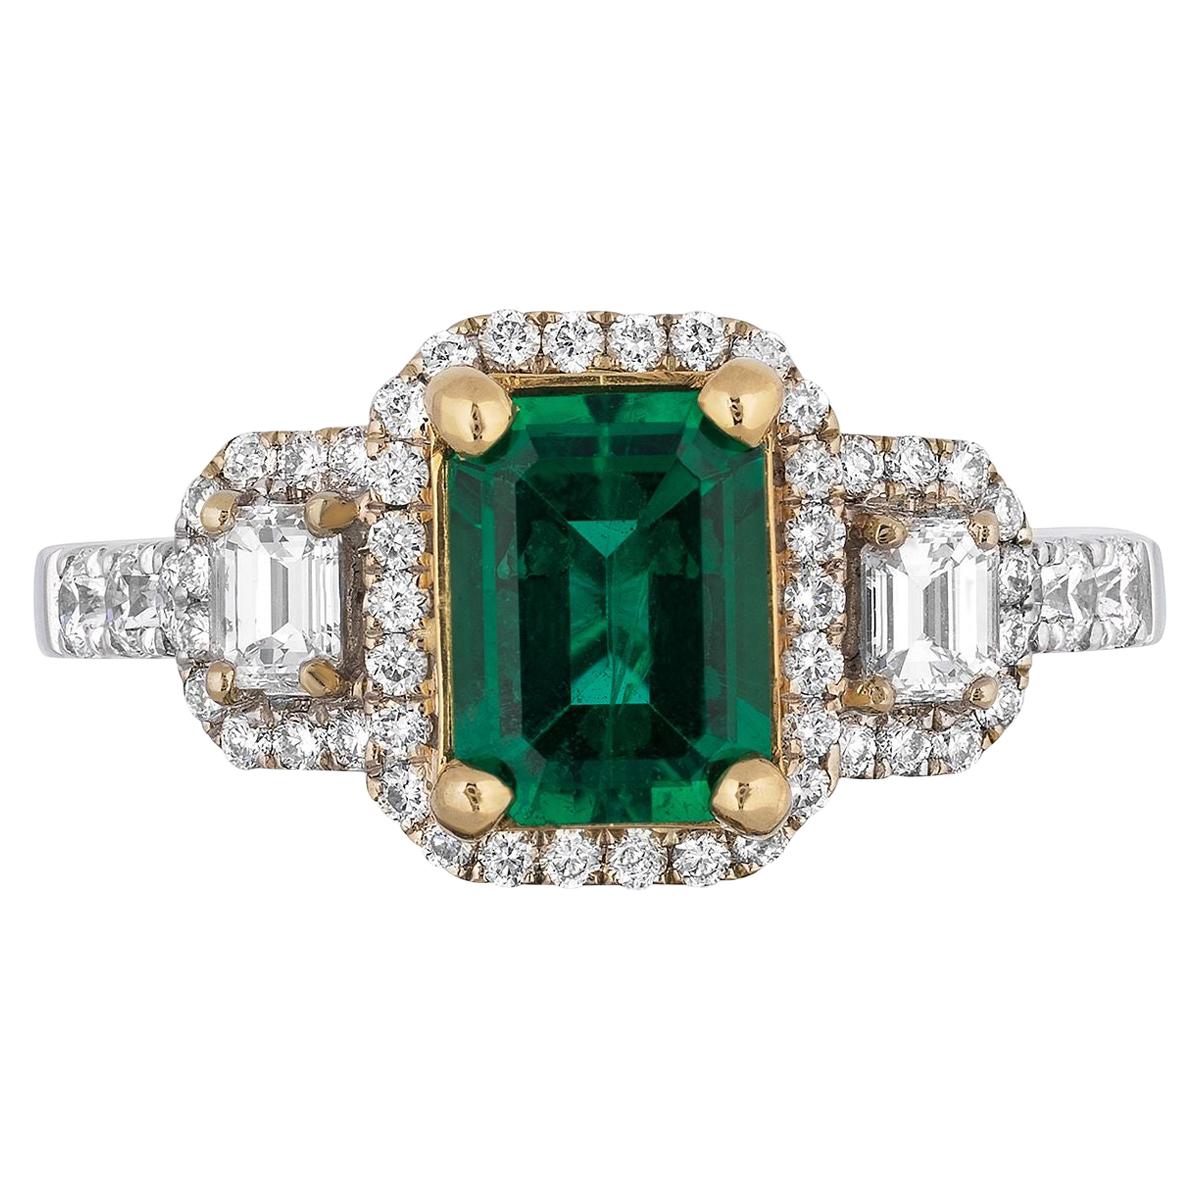 1.24 Carat Zambian Emerald Diamond Cocktail Ring For Sale